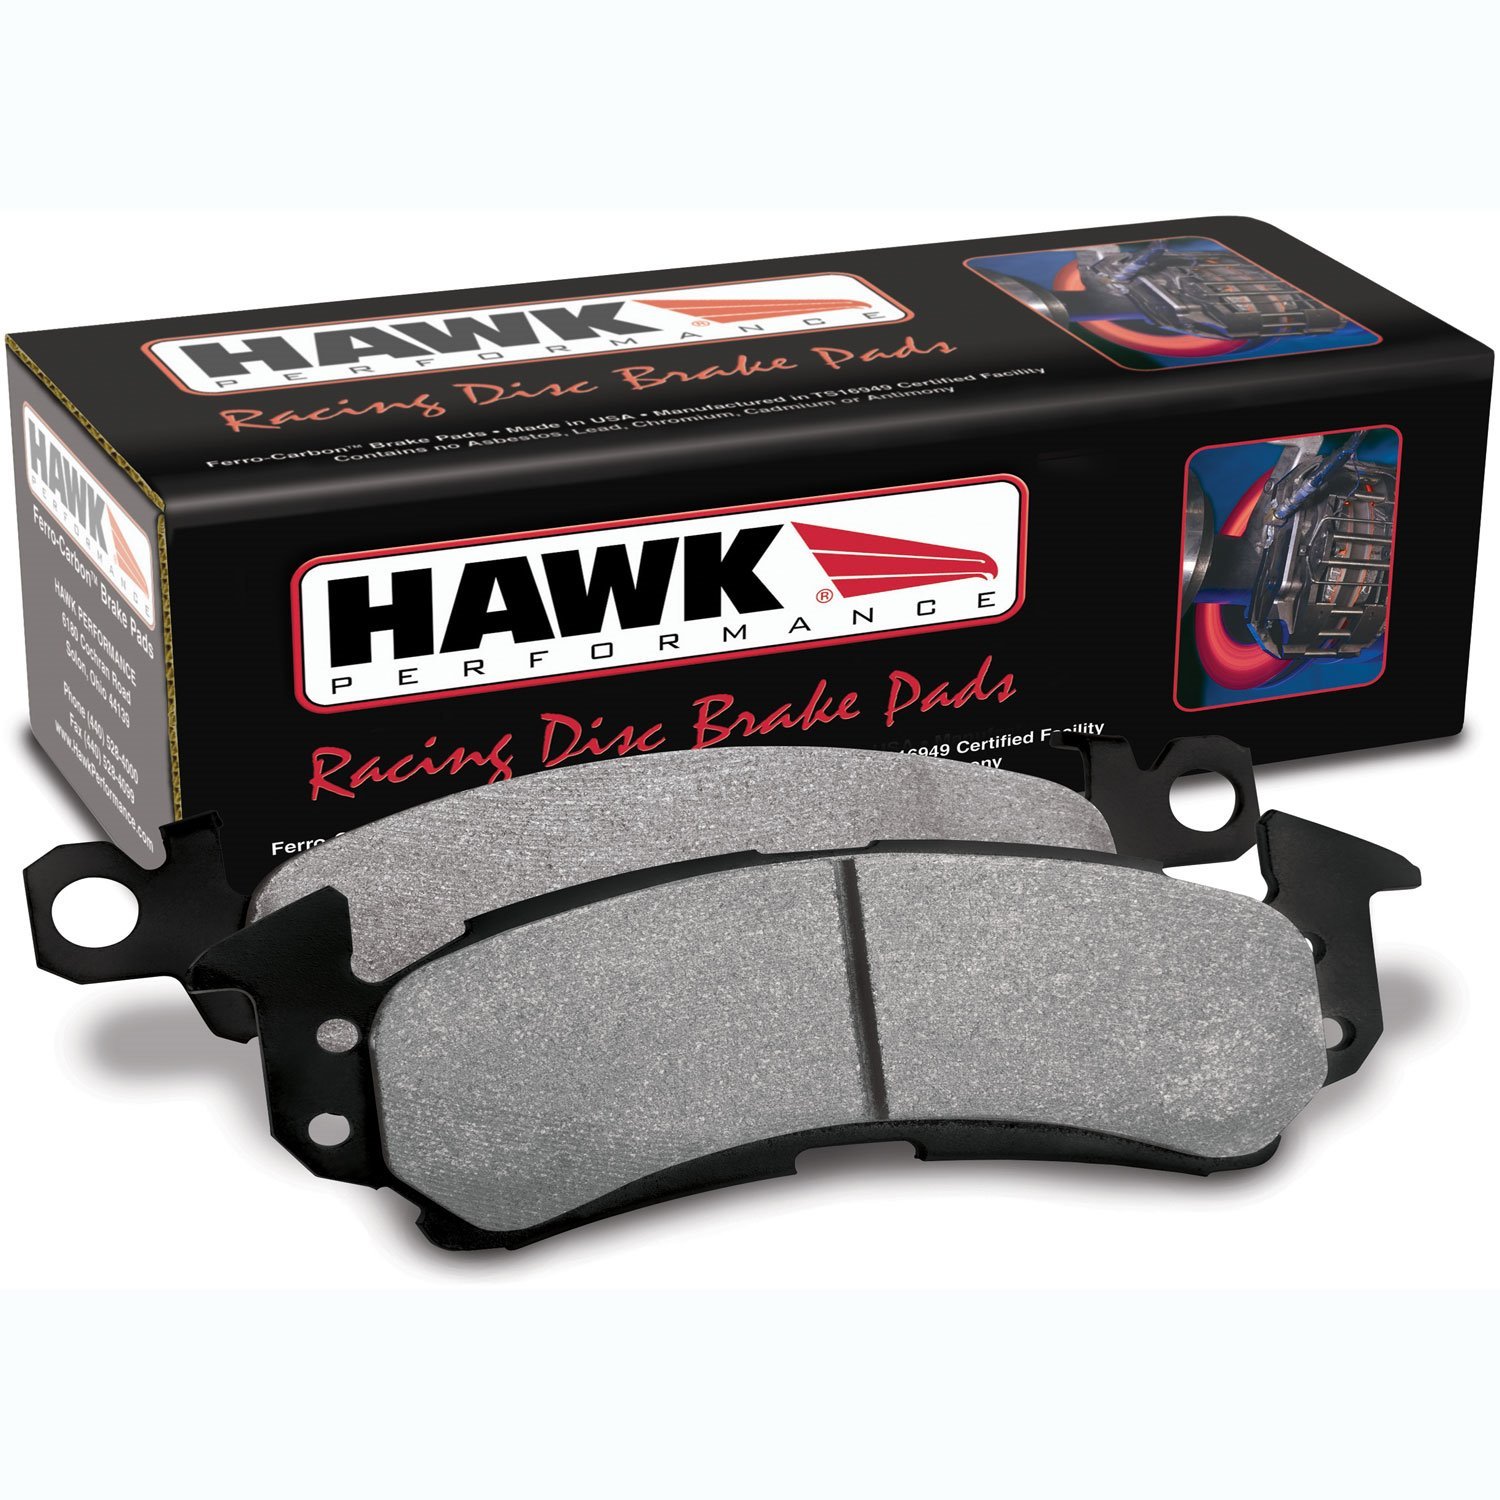 Disc Brake Pad HT-10 w/0.685 Thickness